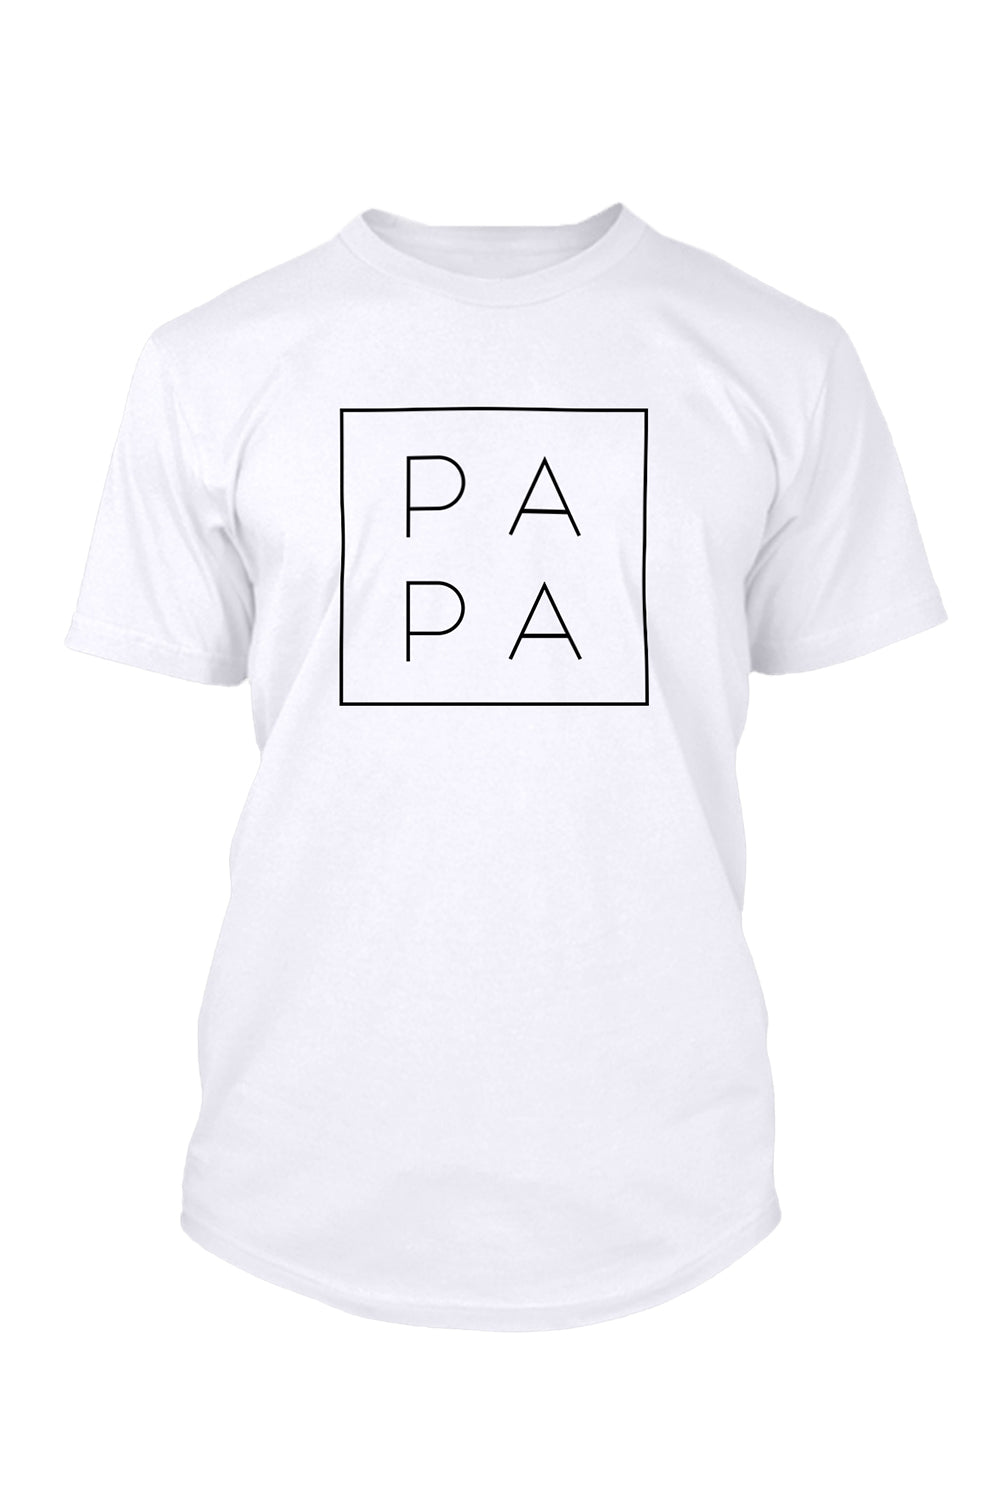 White PAPA Letter Print Crewneck Short Sleeve Men's T Shirt Men's Tops JT's Designer Fashion